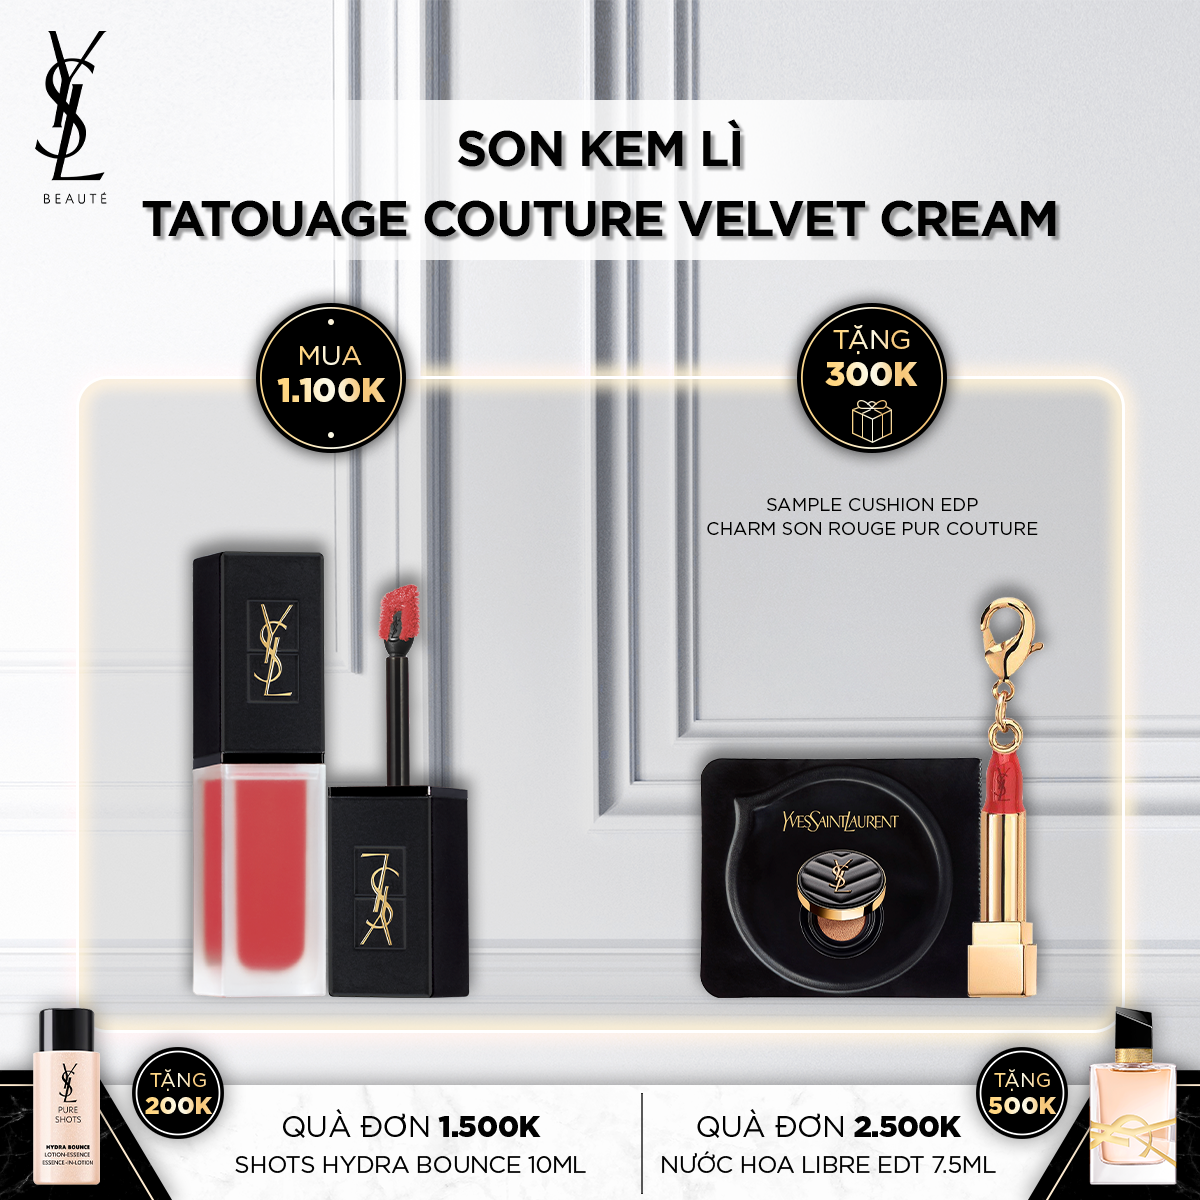 Son kem lì Tatouage Couture Velvet Cream